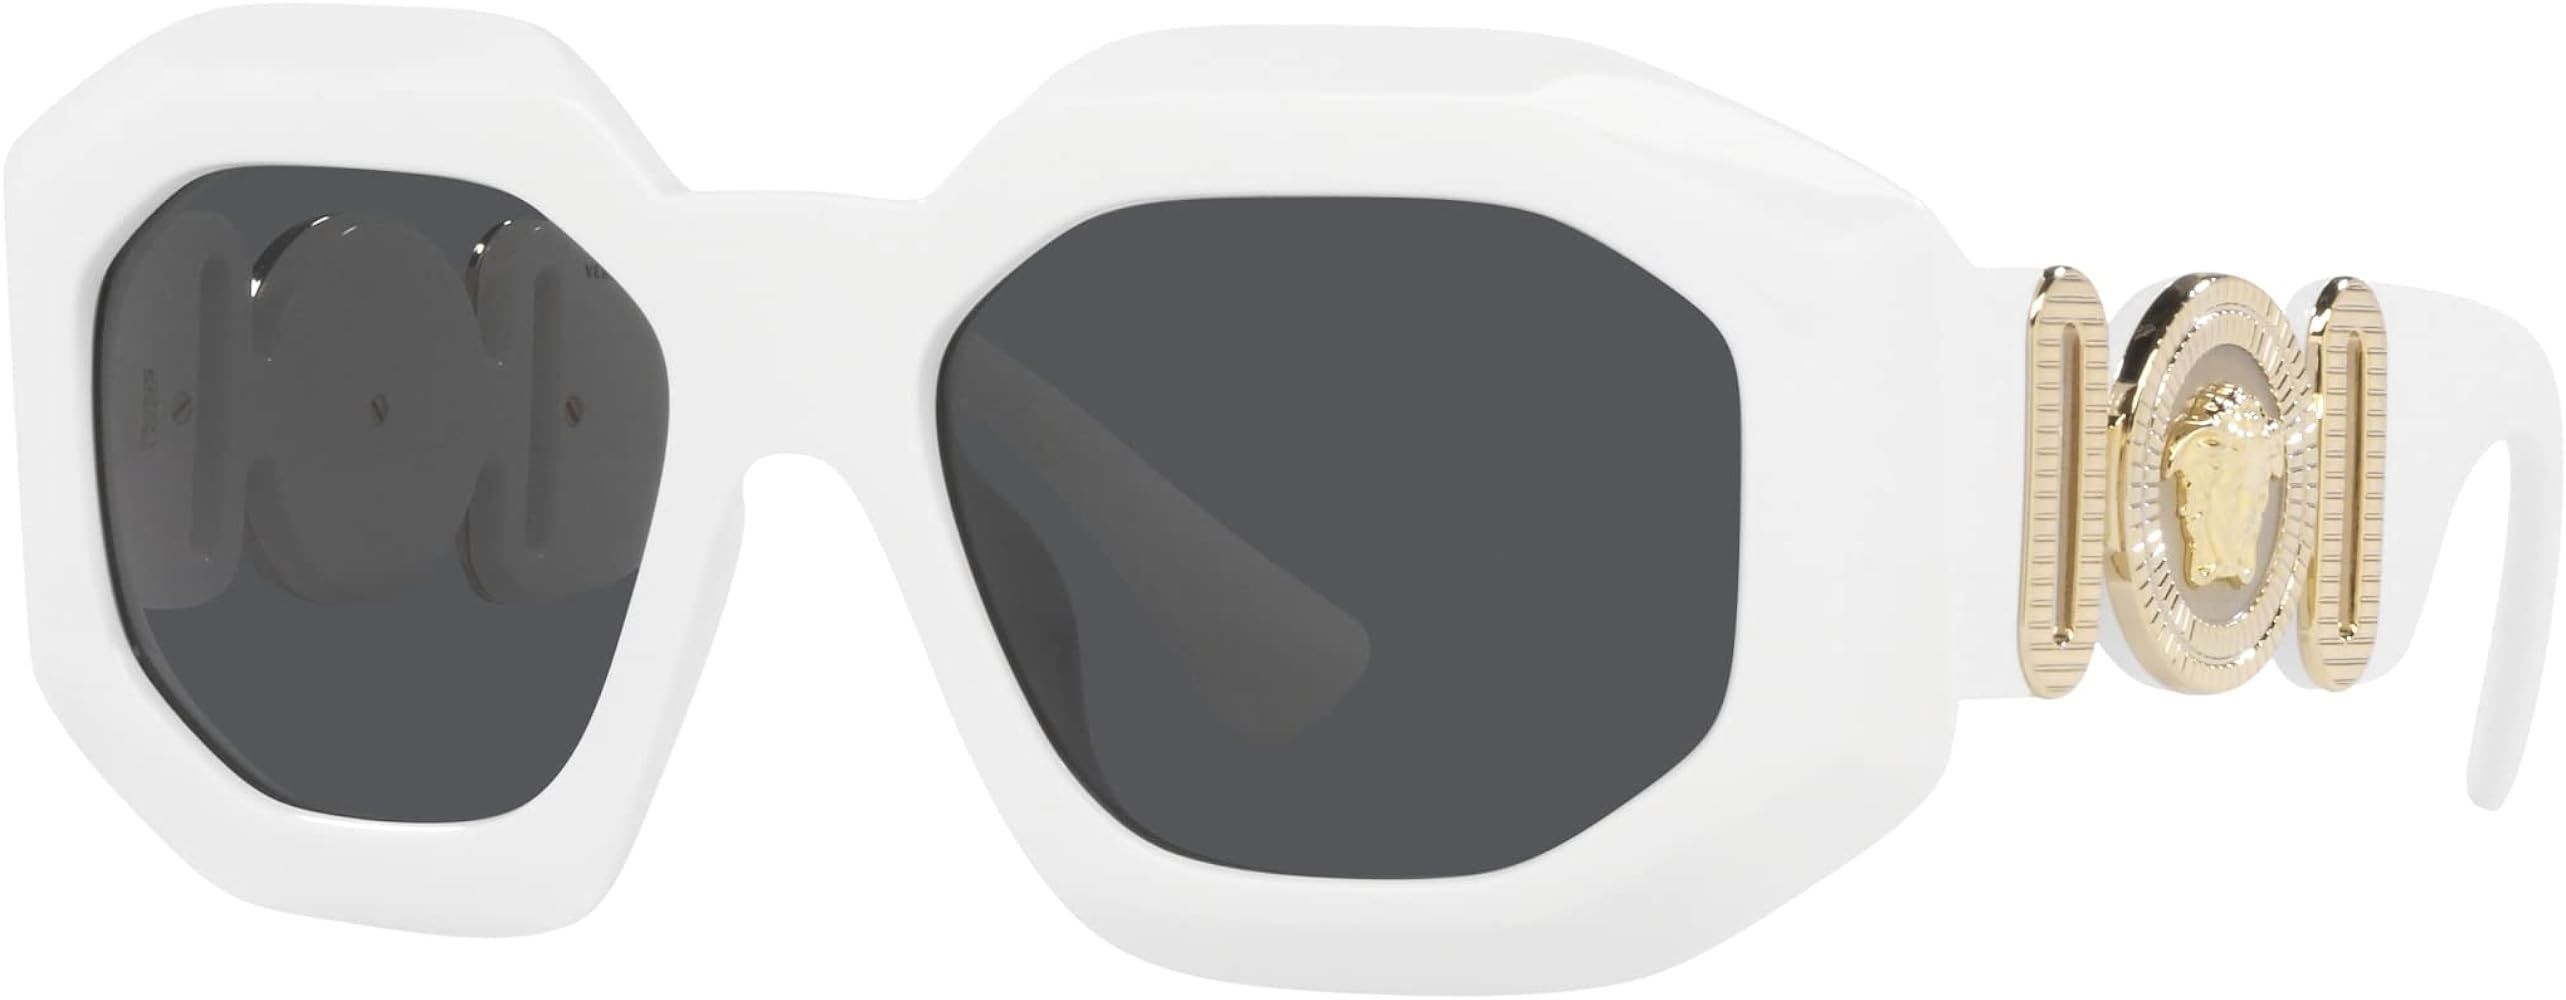 Versace Woman Sunglasses Black Frame, Dark Grey Lenses, 56MM | Amazon (US)